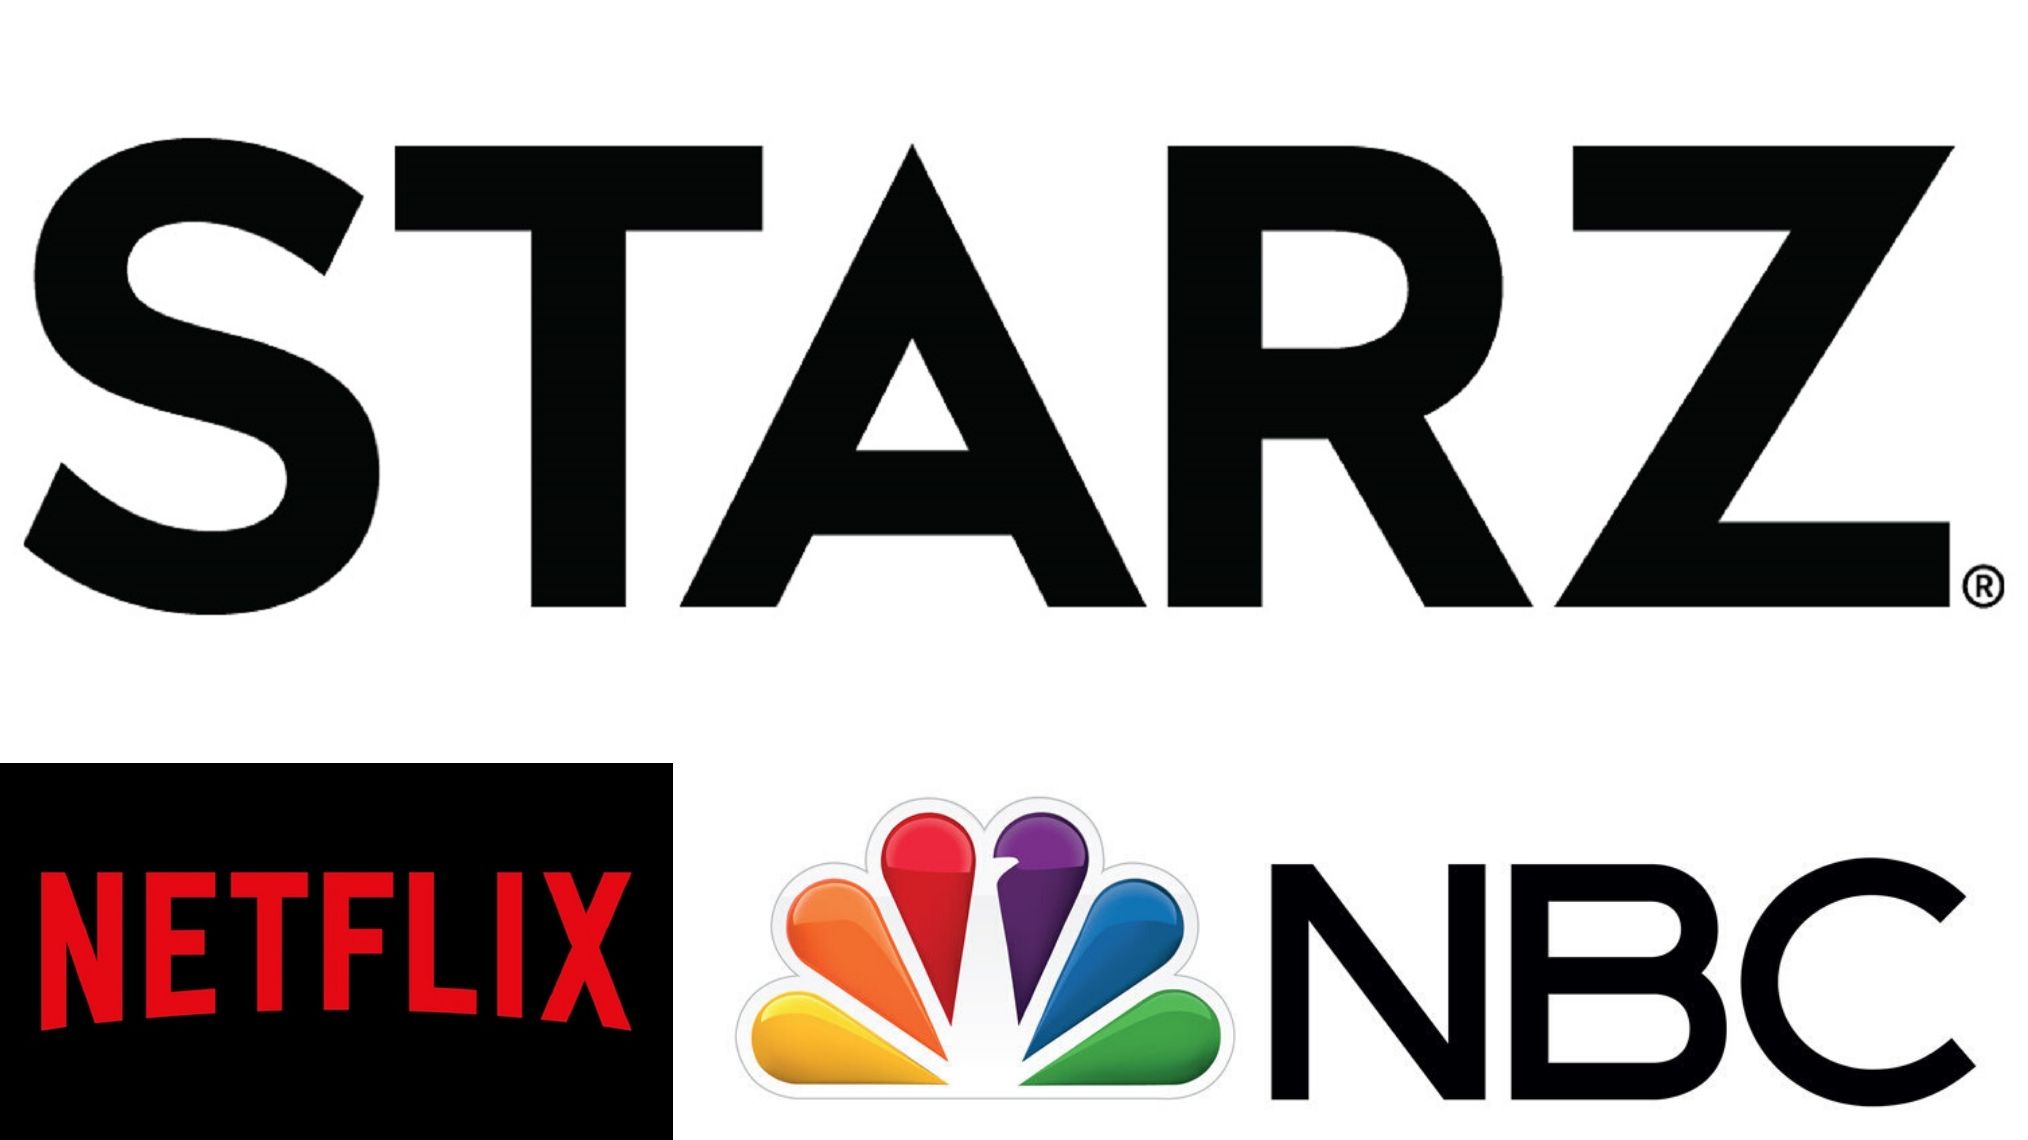 Life more tv. More TV логотип. Море ТВ. More TV logo. Starz Tour.